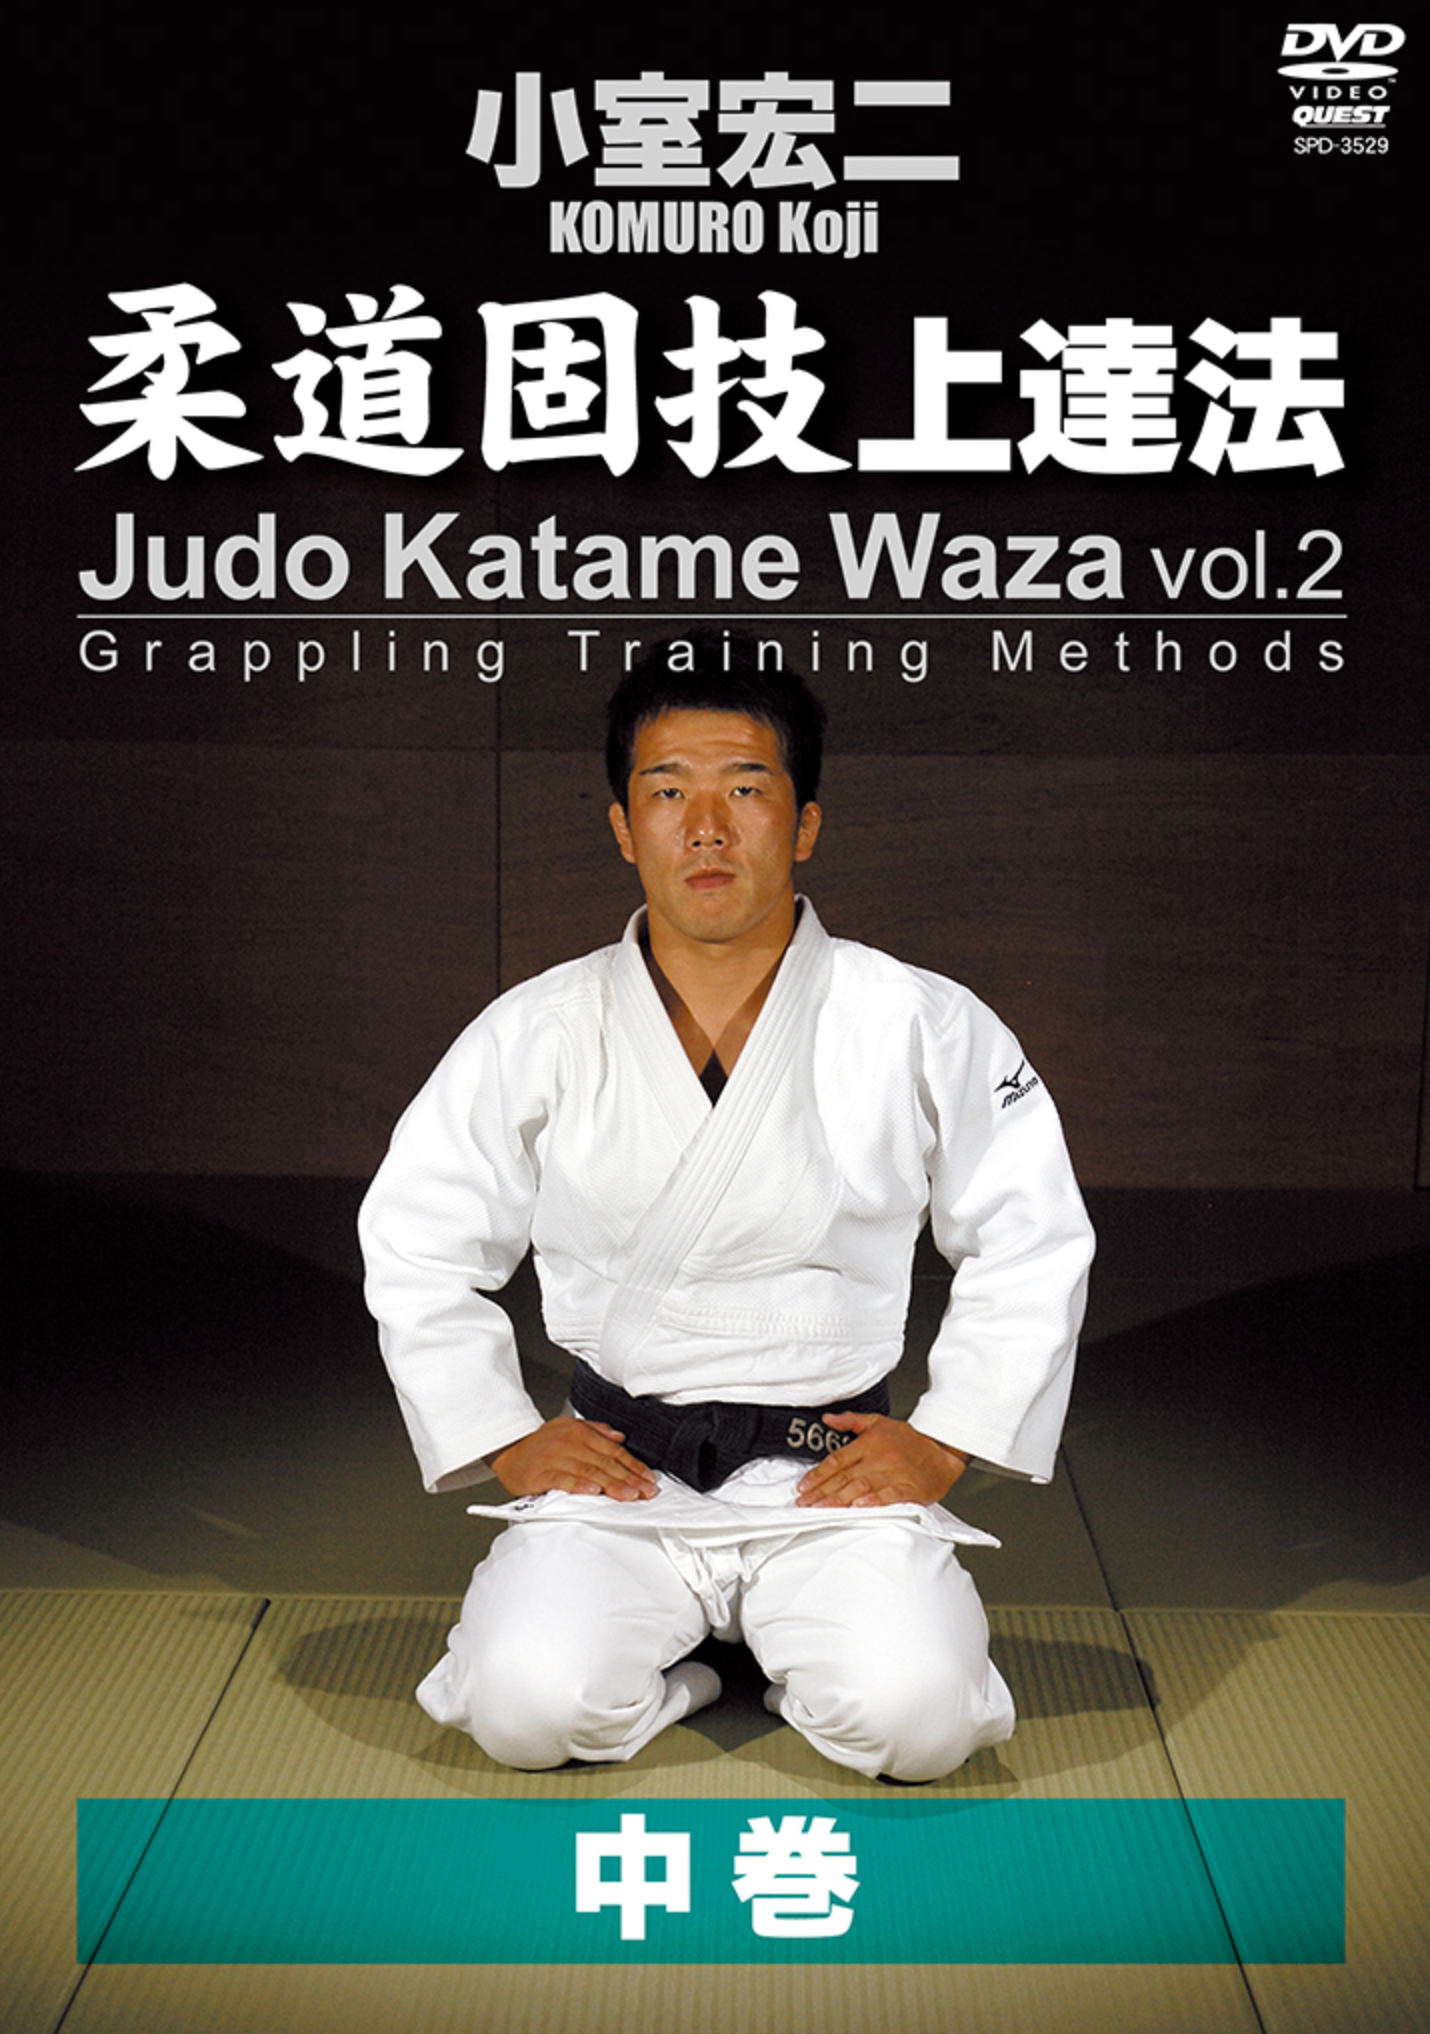 Judo Katame Waza: Grappling Training Methods DVD 2 with Koji Komuro - Budovideos Inc